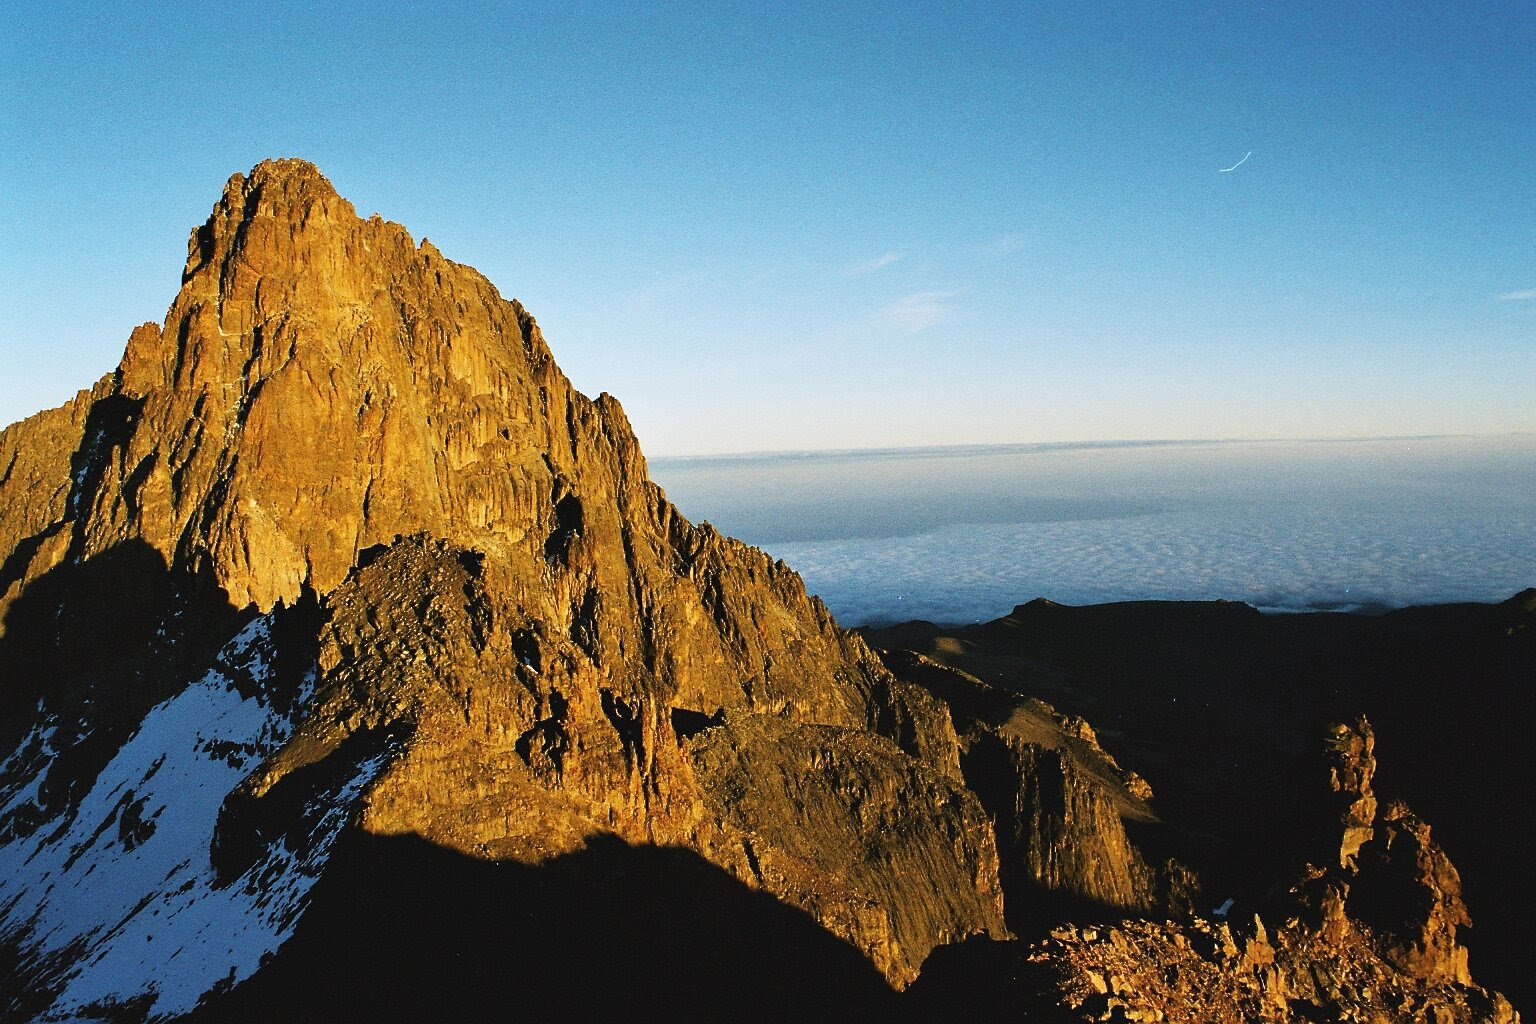 MT kenya Mount_Kenya wikipedia image of beautiful mount kenya with snow on one side shadows sunlight beautiful.jpg